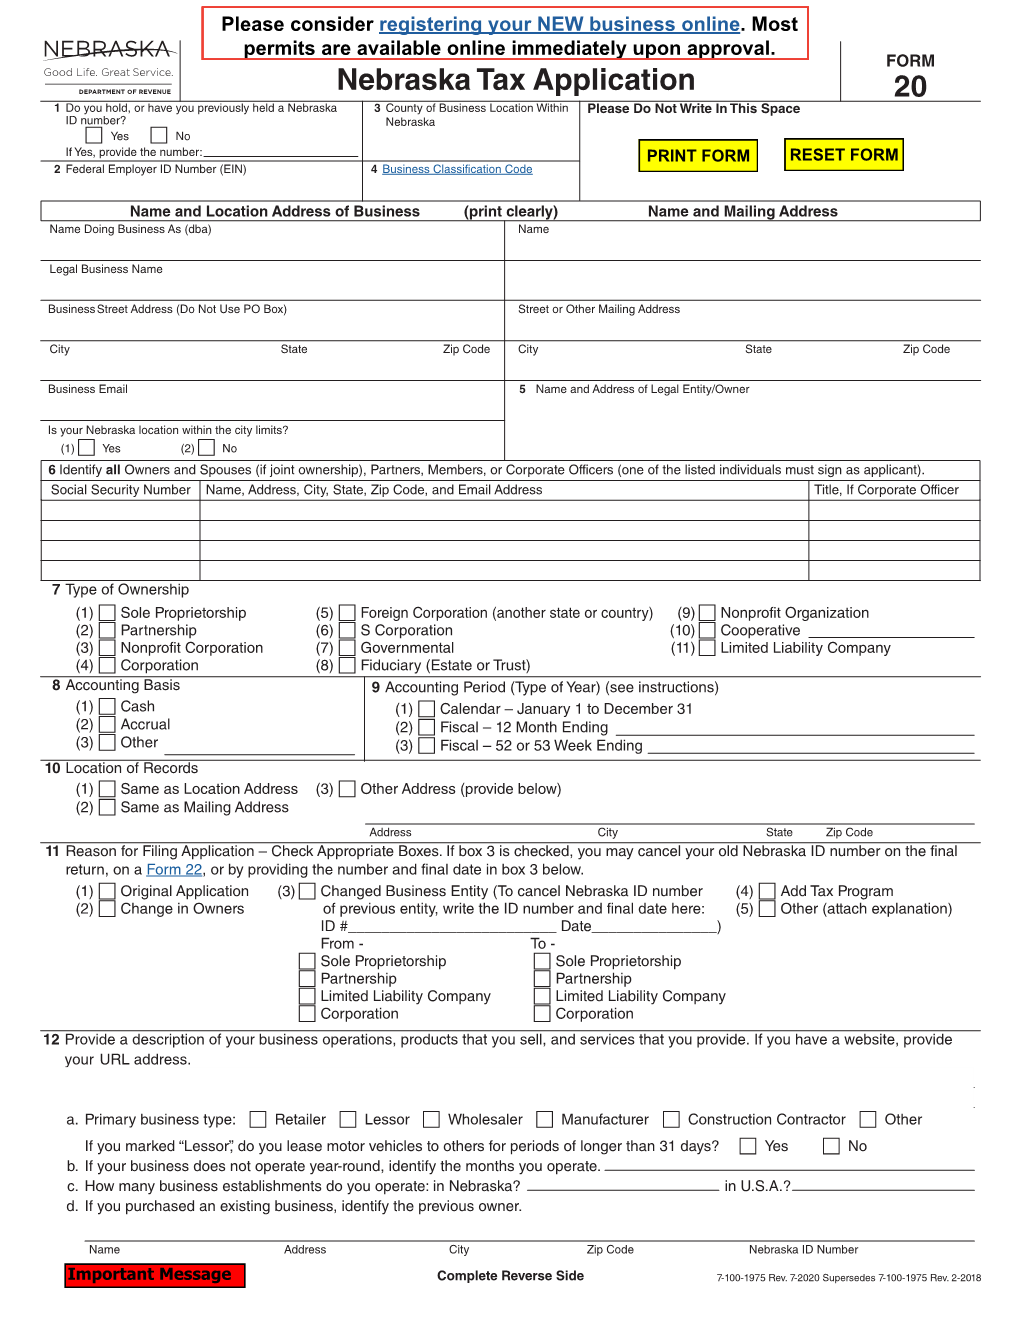 Nebraska Tax Application, Form 20